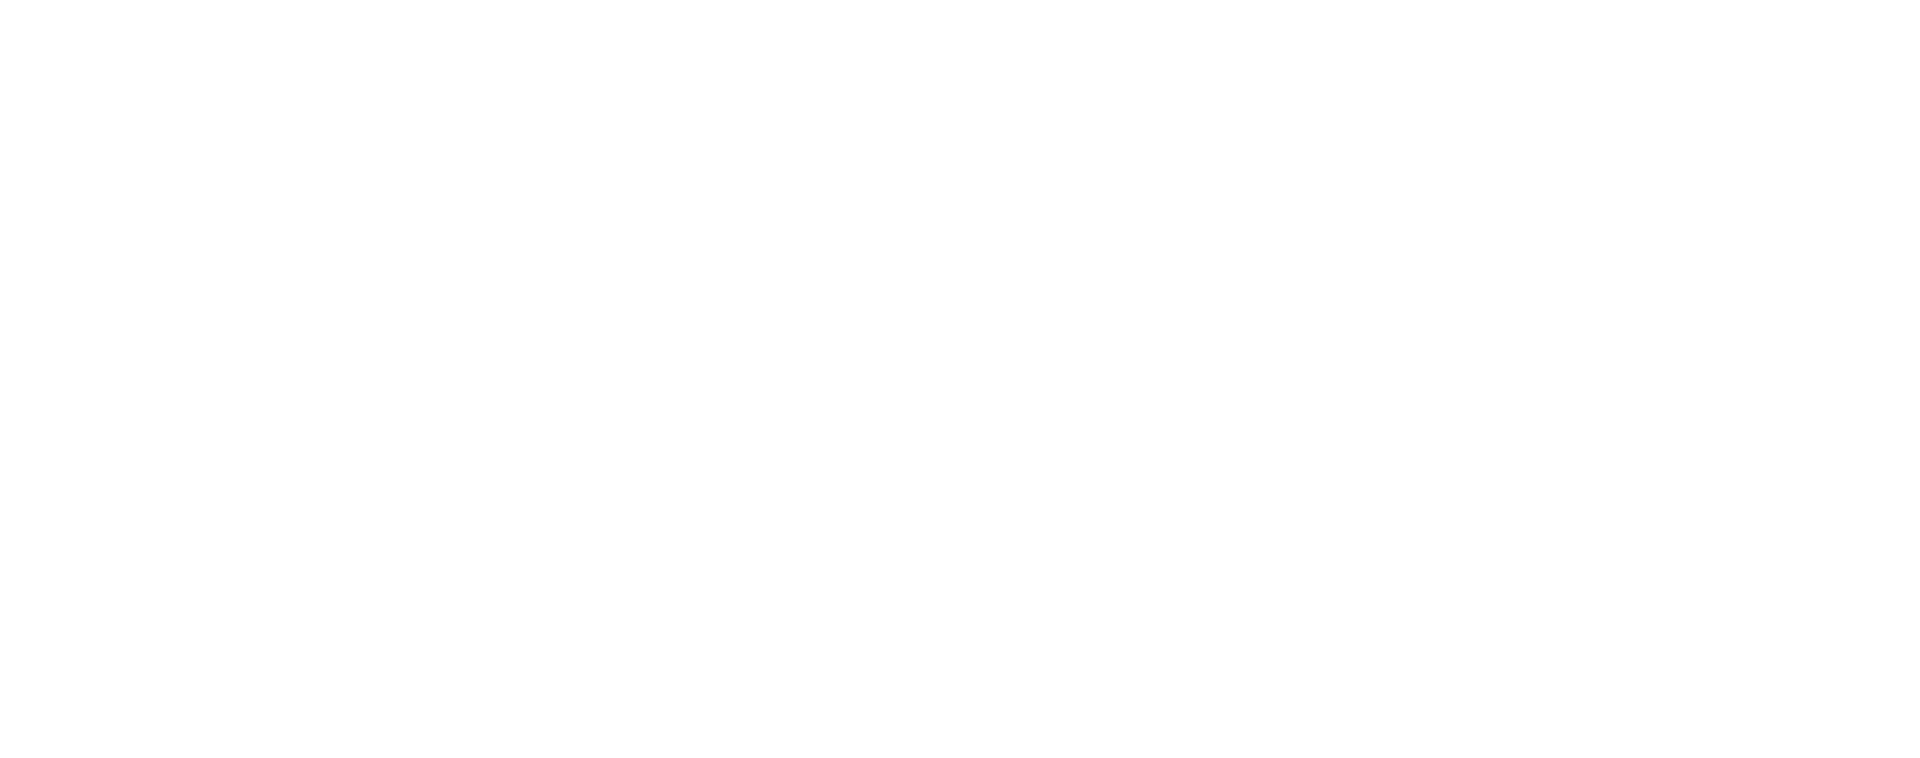 Jan Steininger Investiční poradce / Steininger & Říha